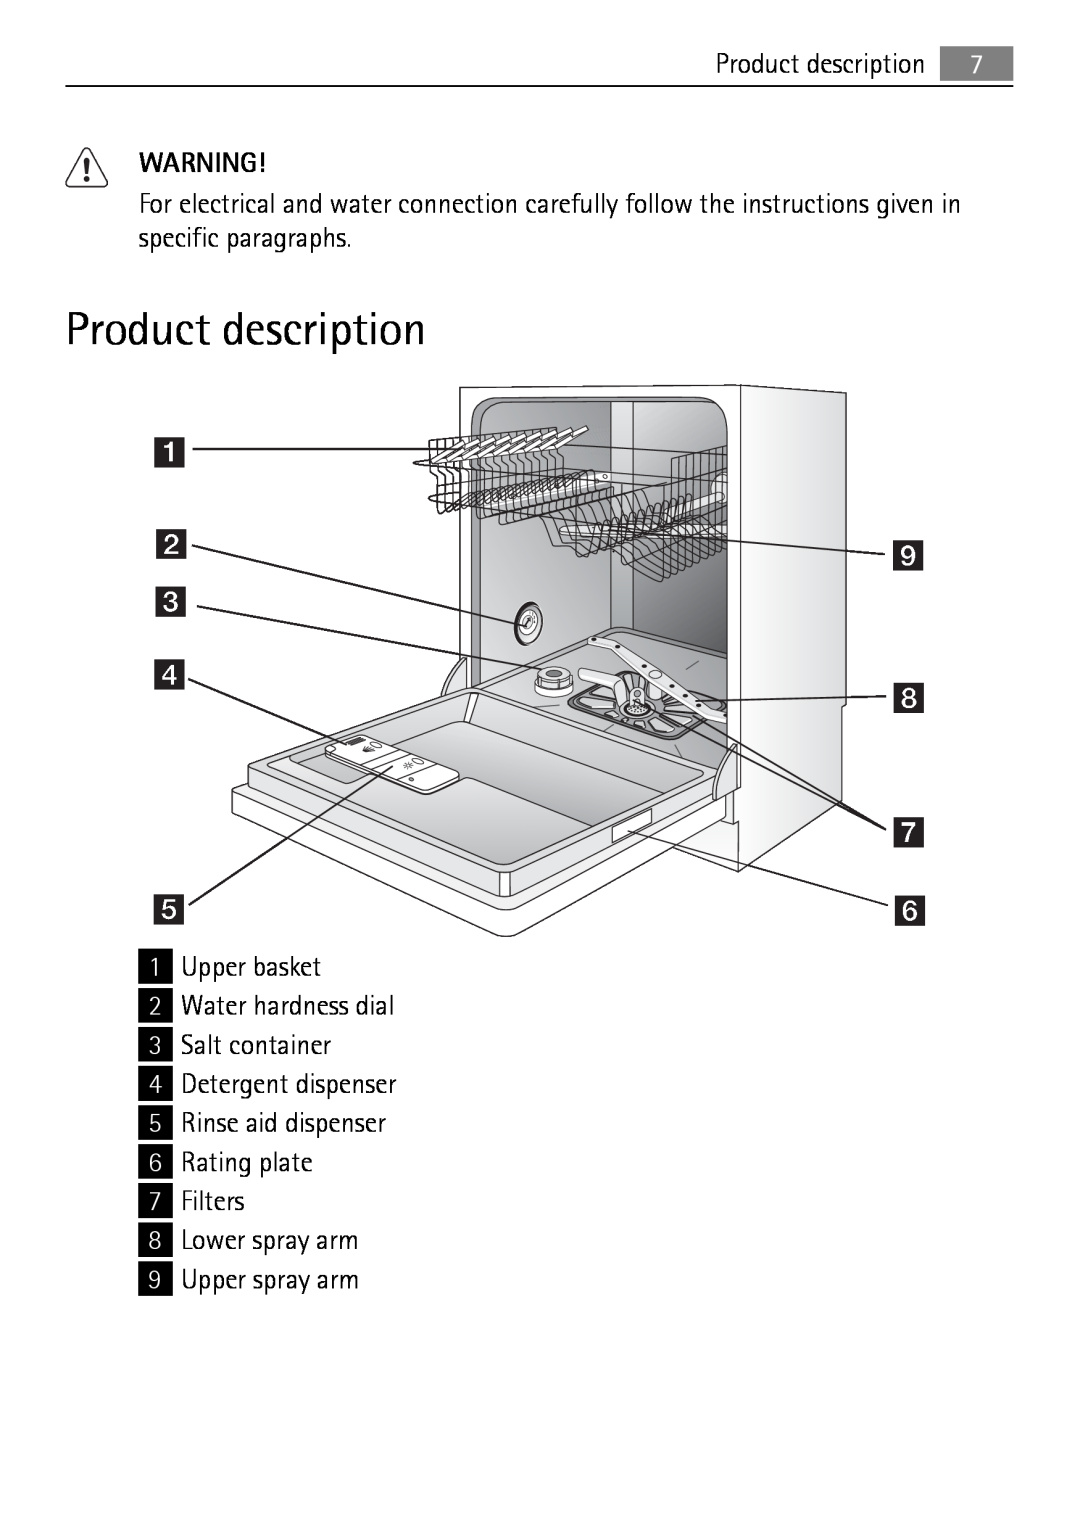 Electrolux 65011 VI user manual Product description, Upper basket 2 Water hardness dial 3 Salt container 